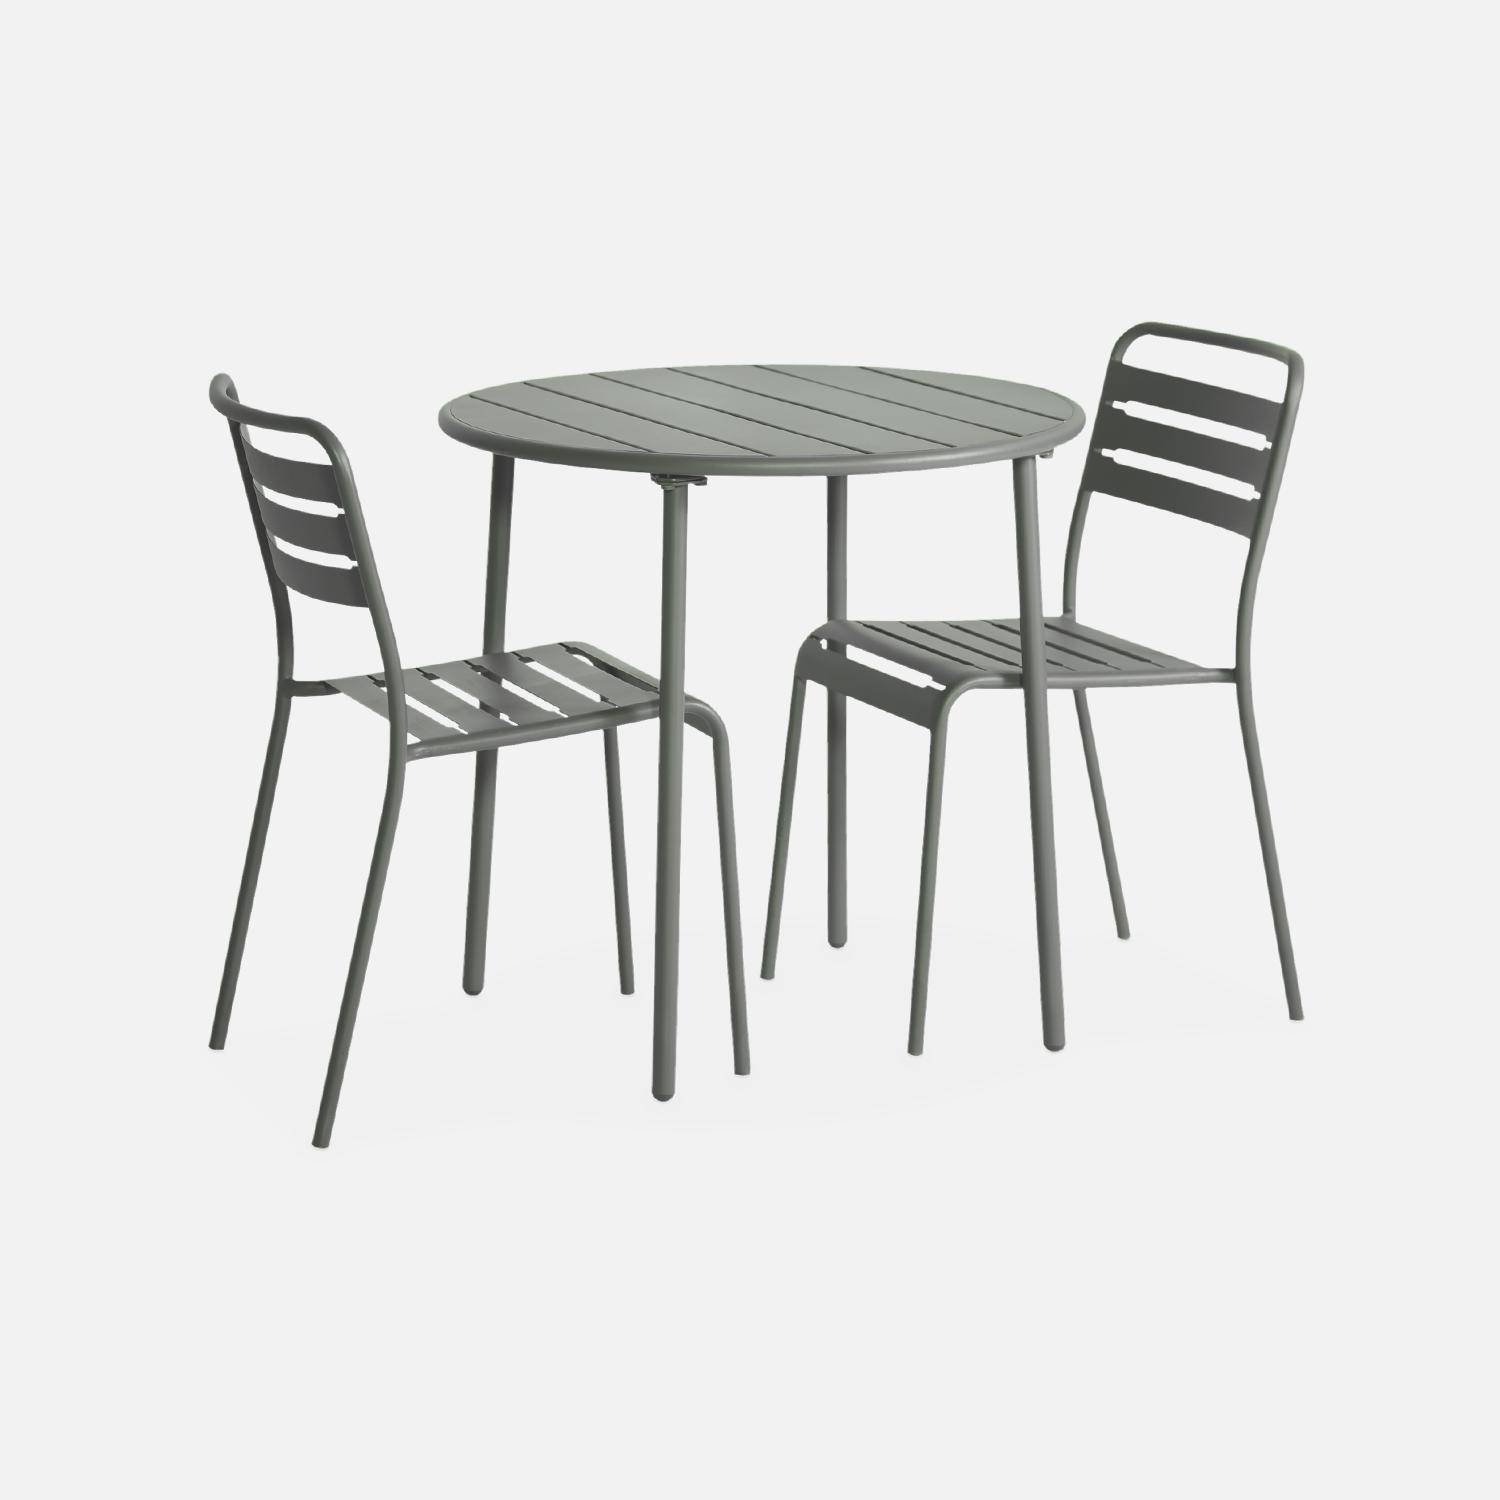 Table de jardin métal savane Amélia avec 2 chaises, traitement antirouille,sweeek,Photo3